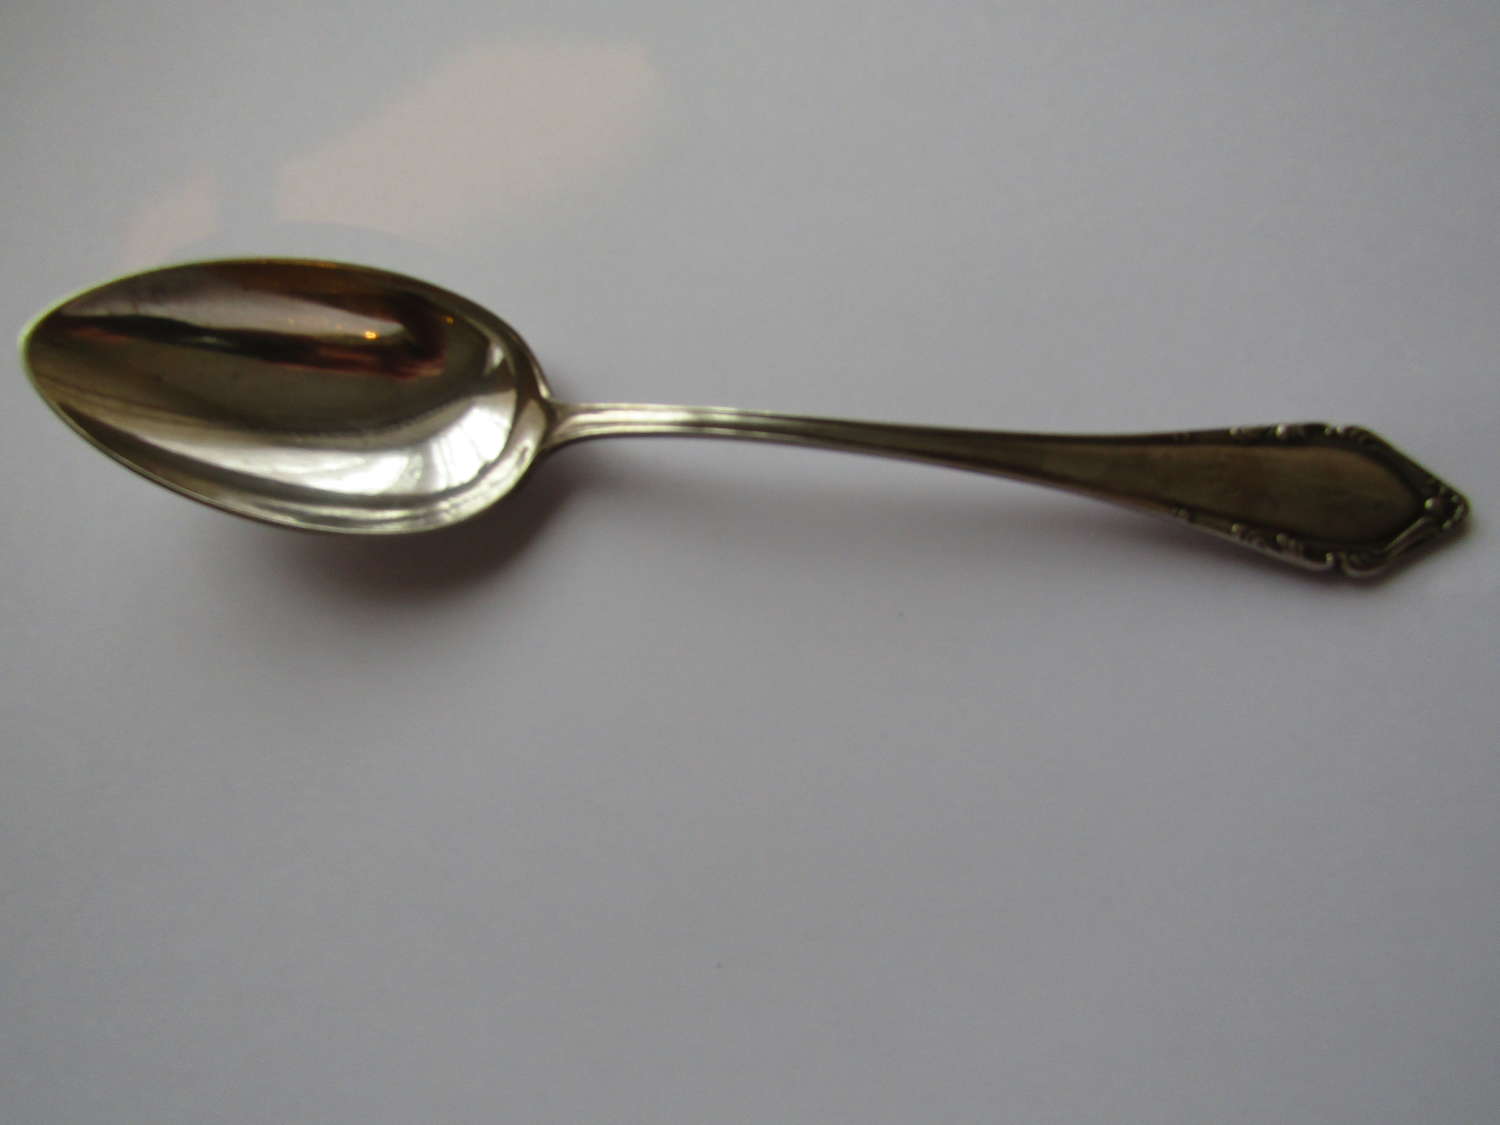 WW2 German SS spoon